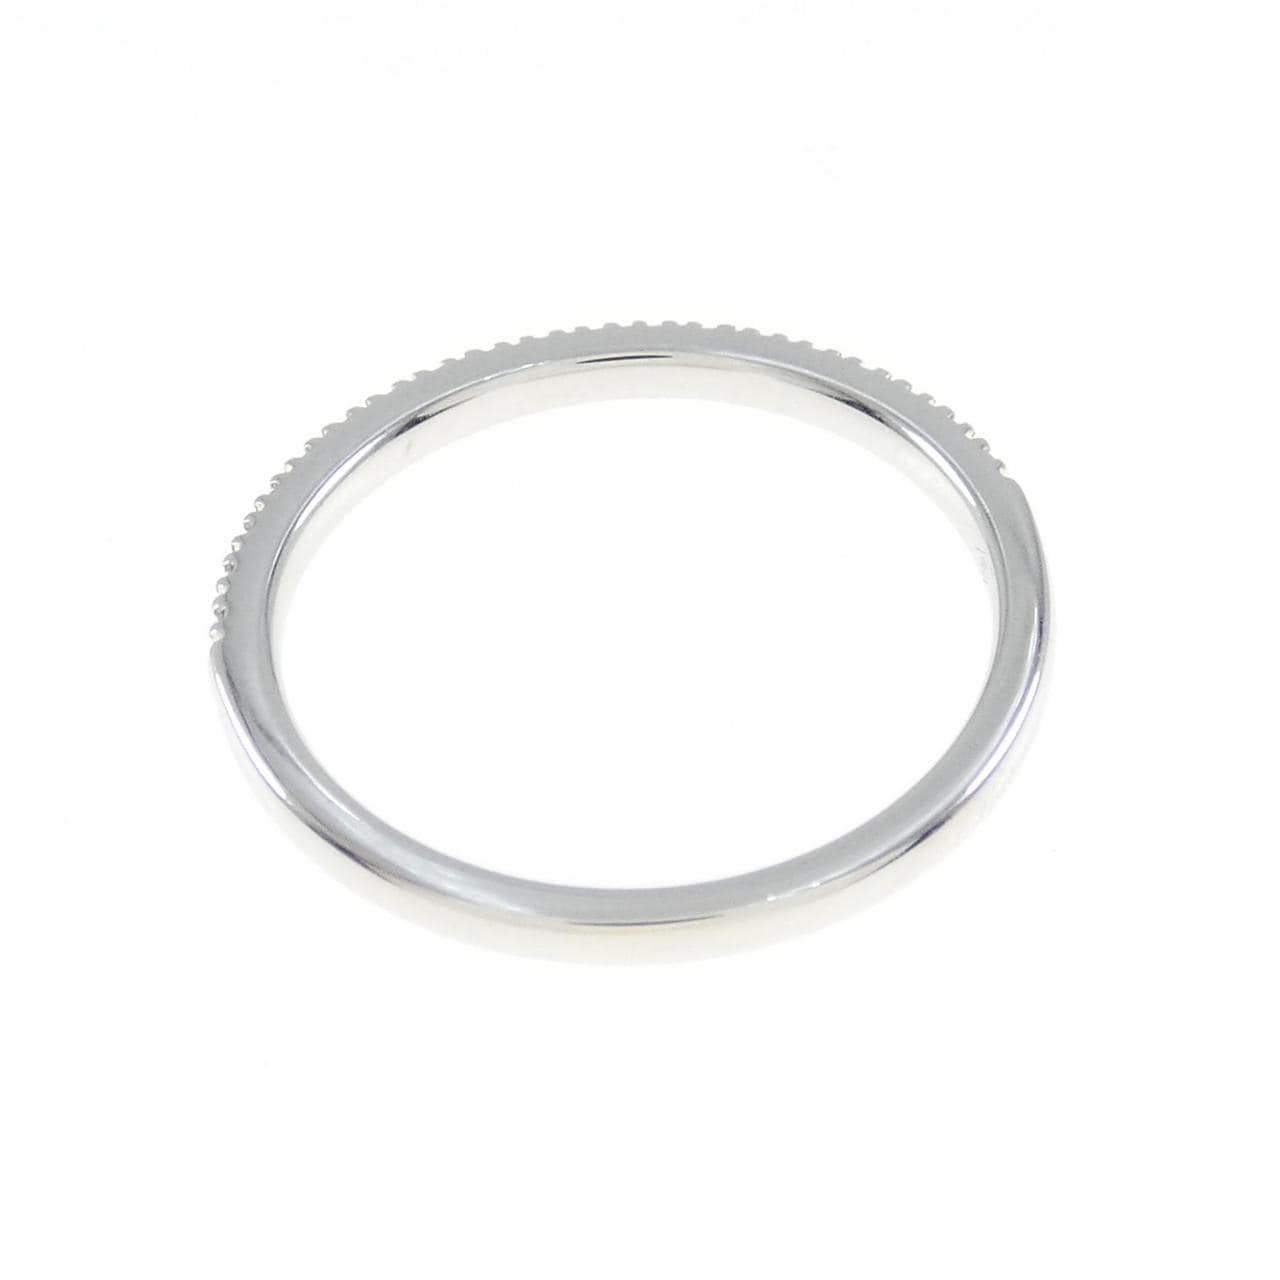 BELLESIORA Diamond Ring 0.12CT